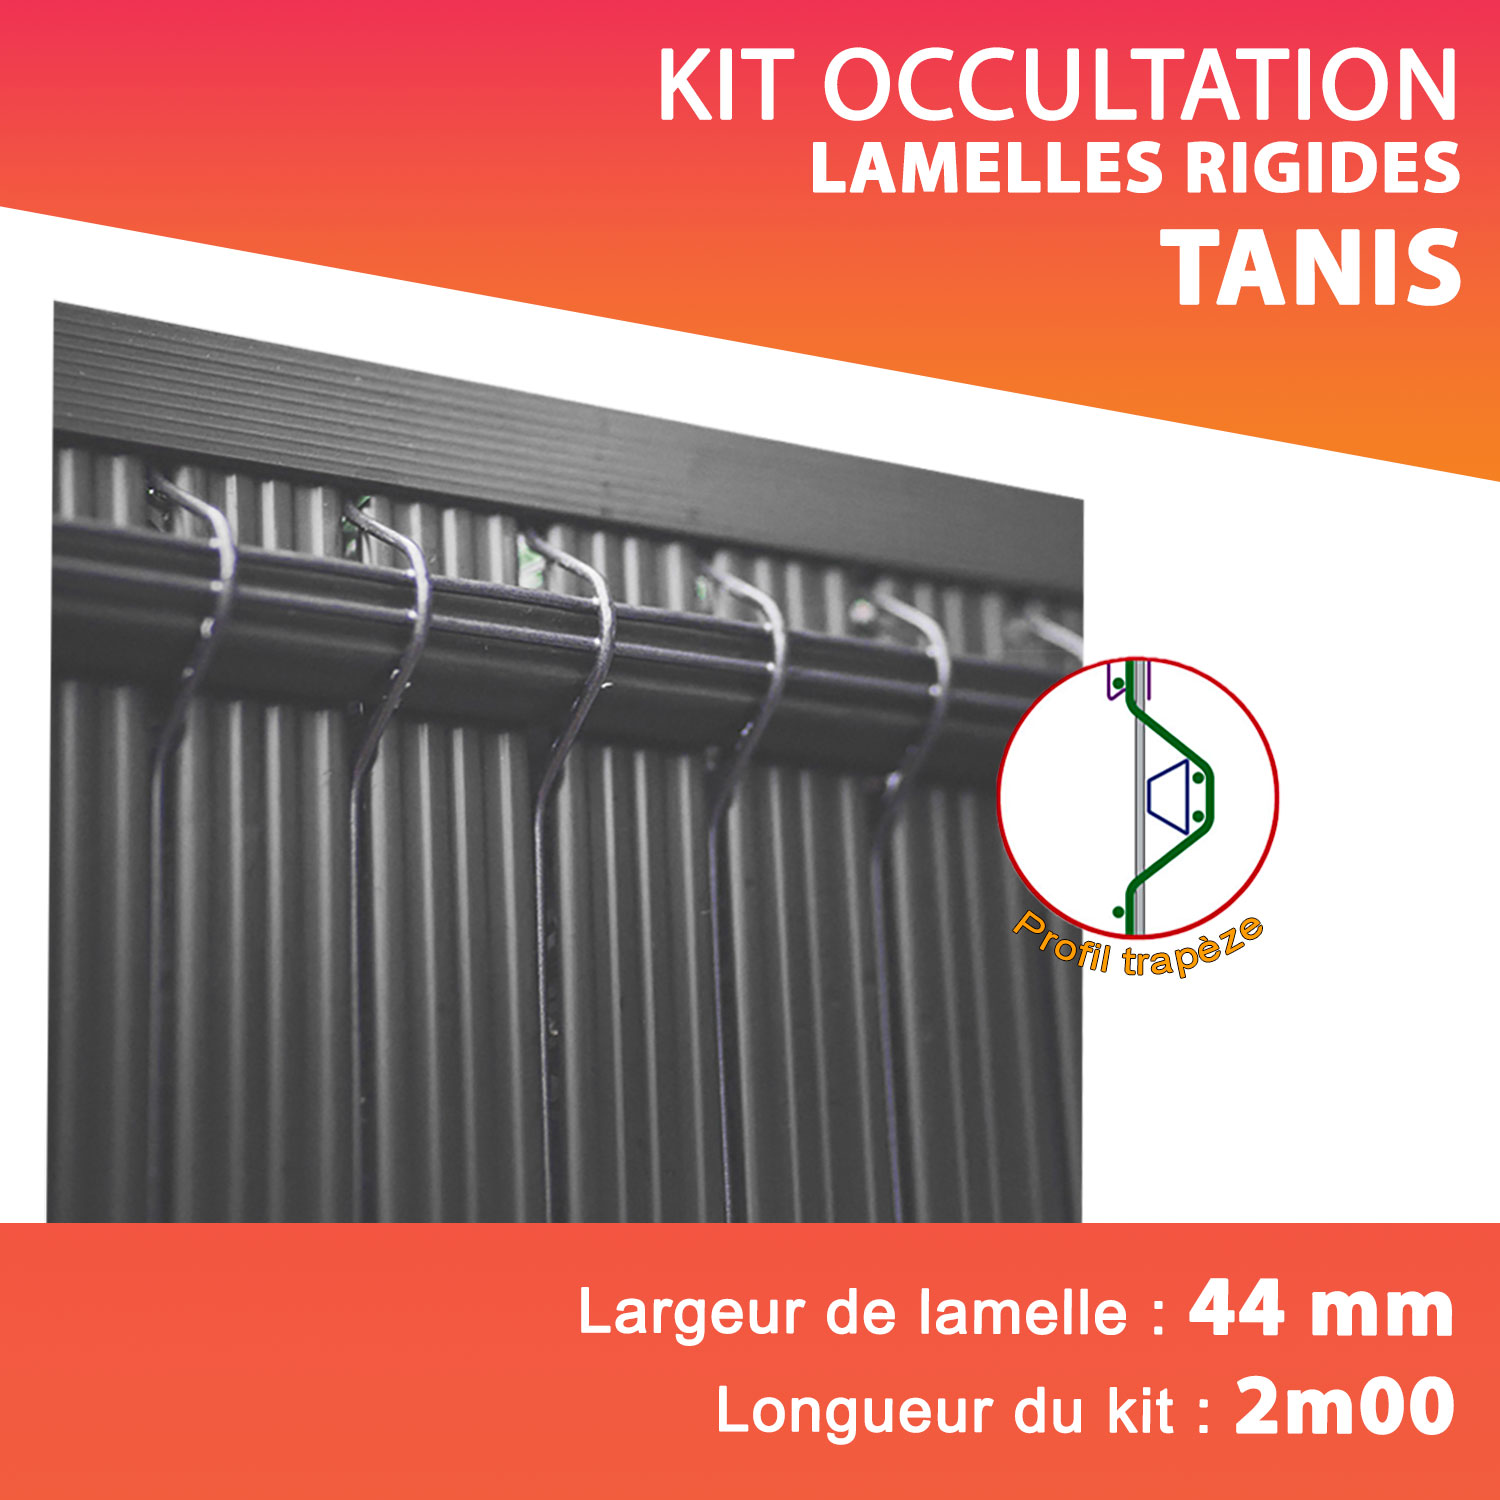 Kit TANIS lamelles rigides occultantes Lg. 2m00 Lg. lamelle 44 mm